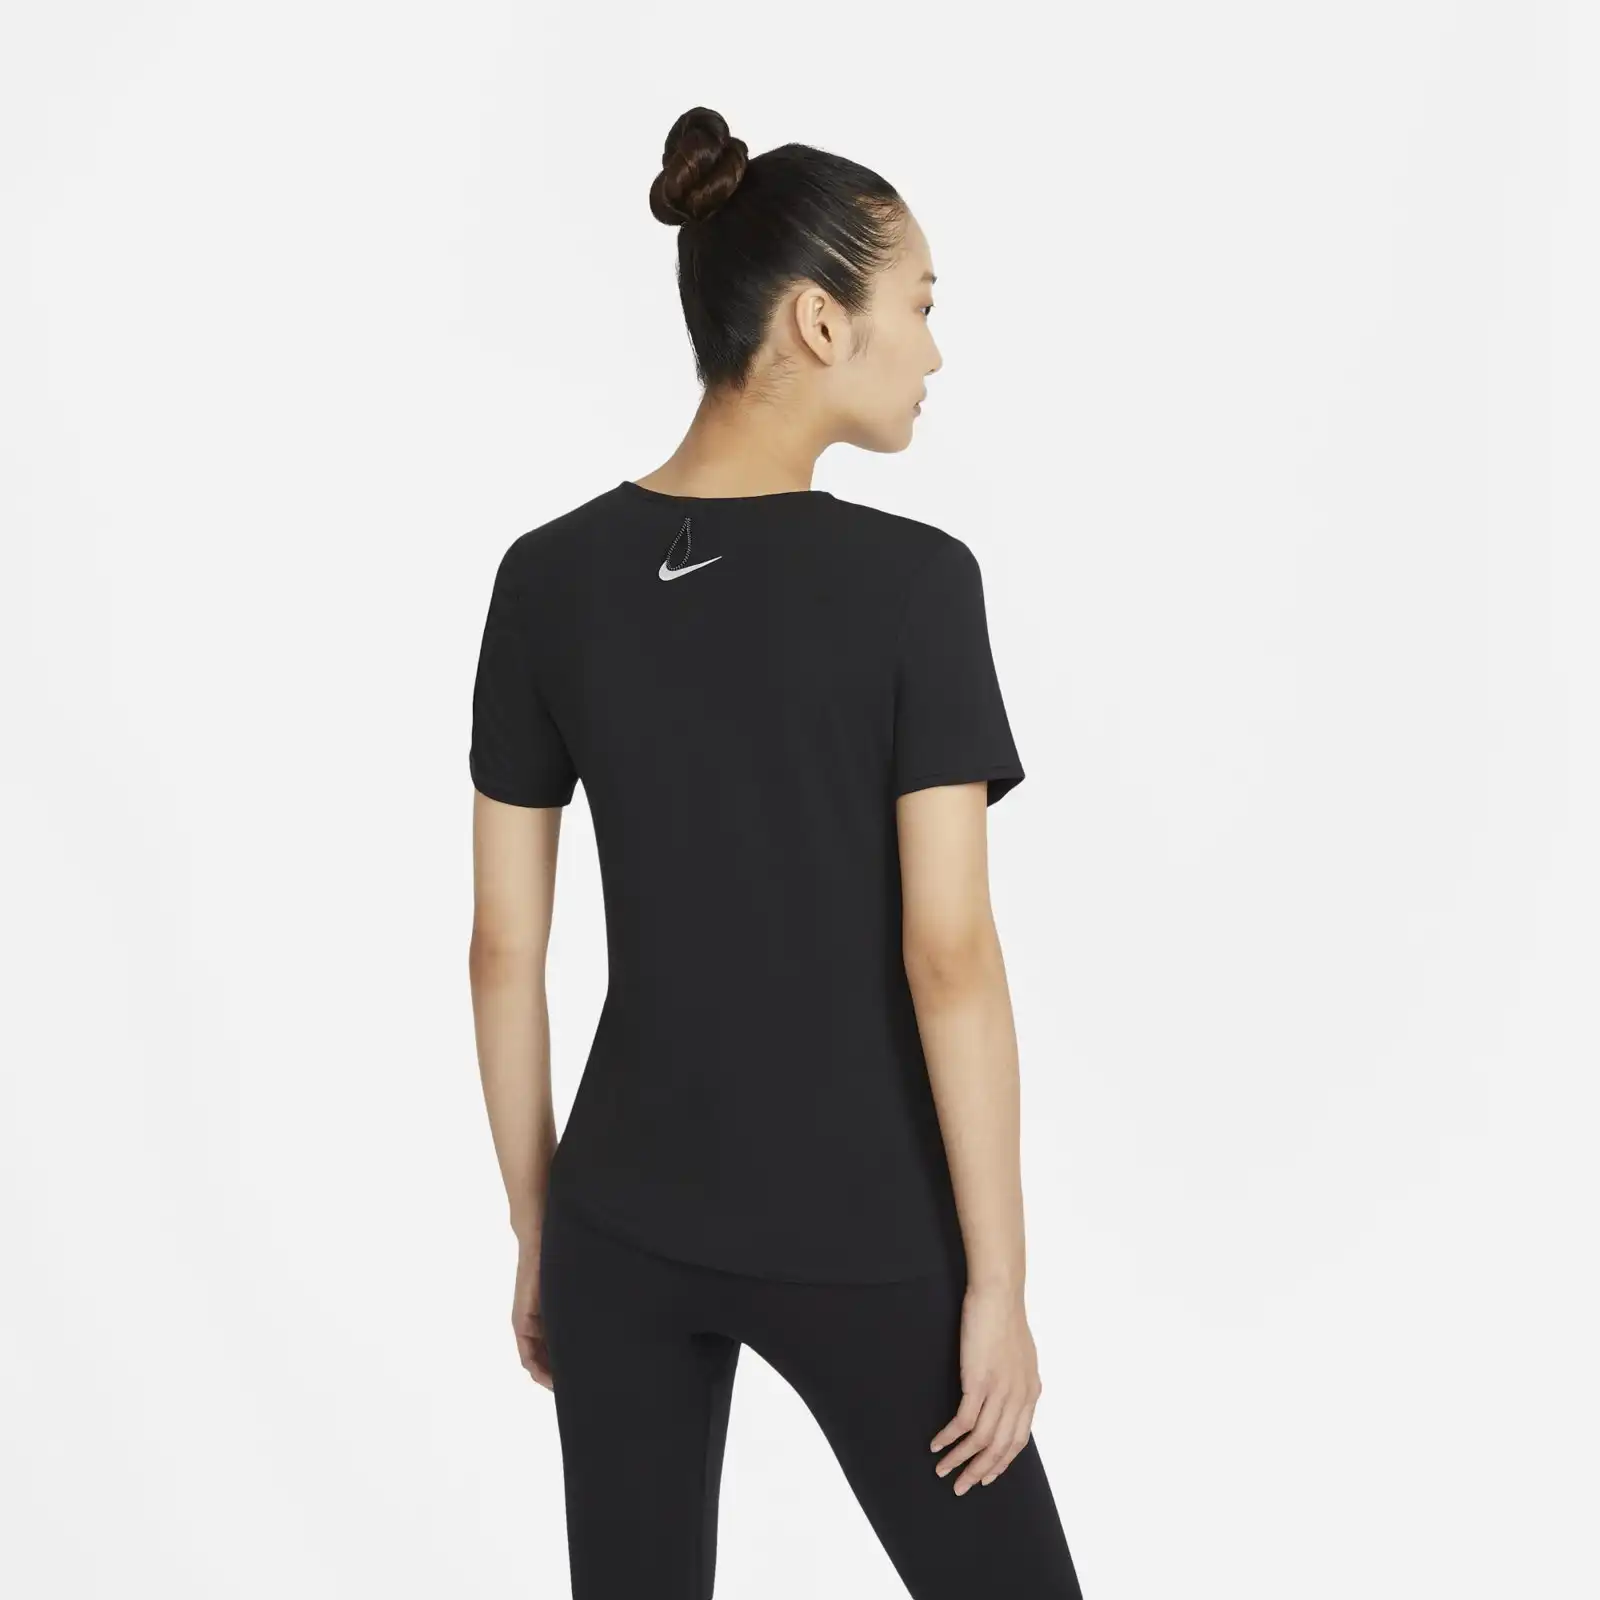 Nike Women's Run Division City Sleek Short Sleeve Top - Black